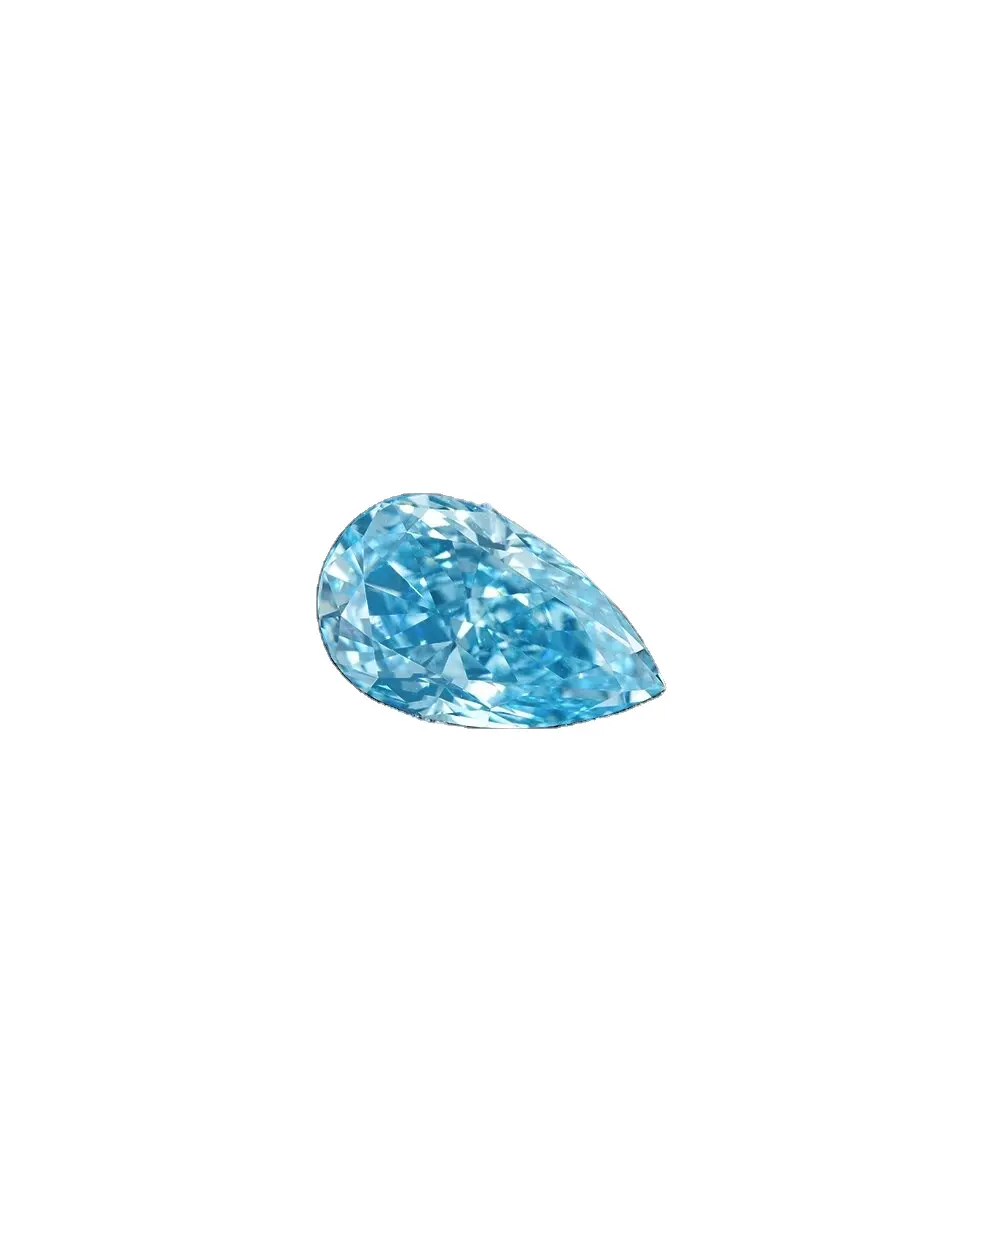 1.7-5.22ct Lab-grown diamond  Pear Cut  VVS2  VS1  2EX VG  IGI SH Fancy Intense Blue